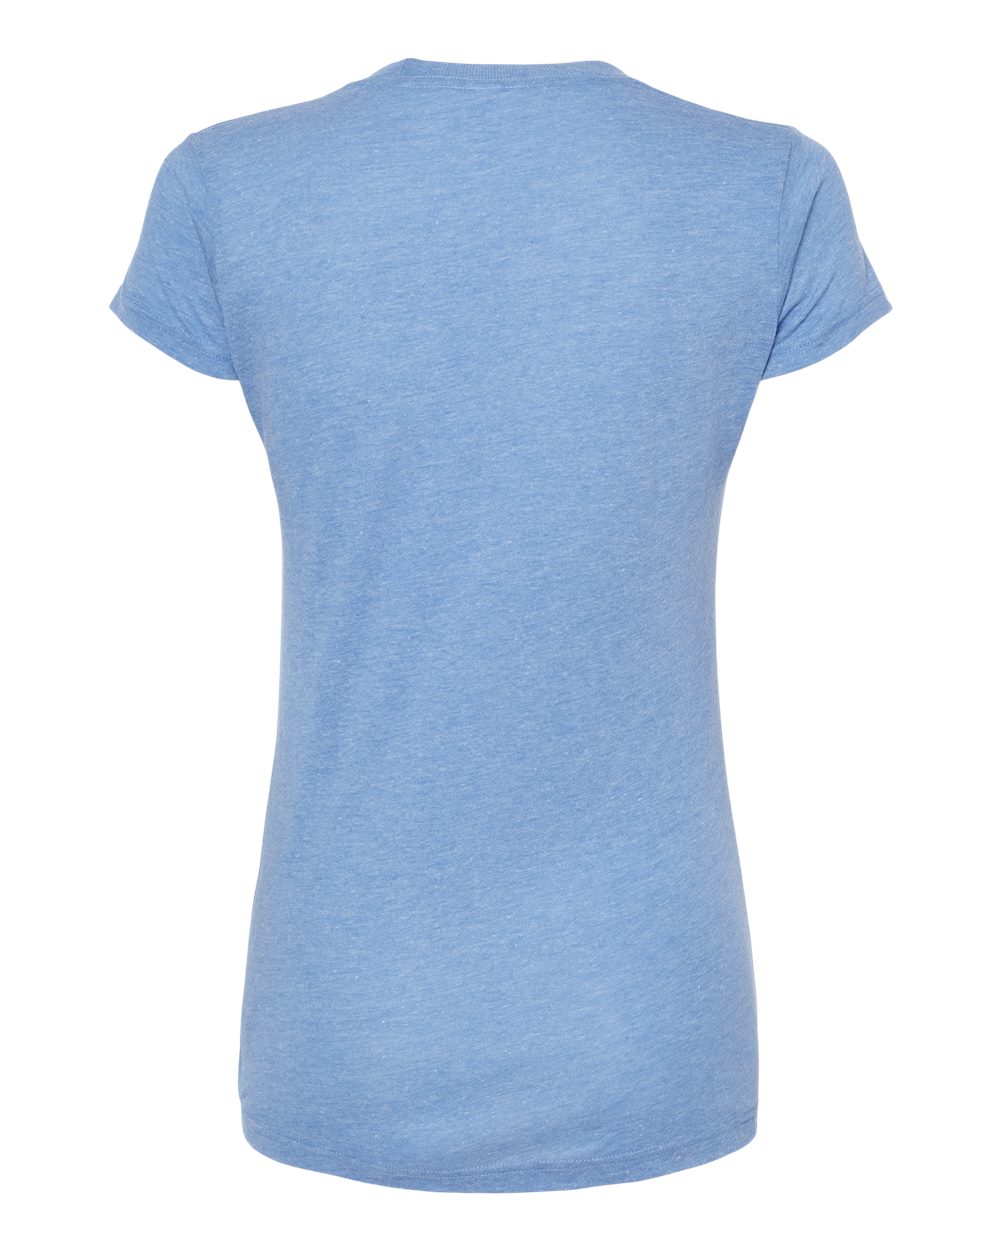 Tultex 254 - Tri-Blend T-Shirt